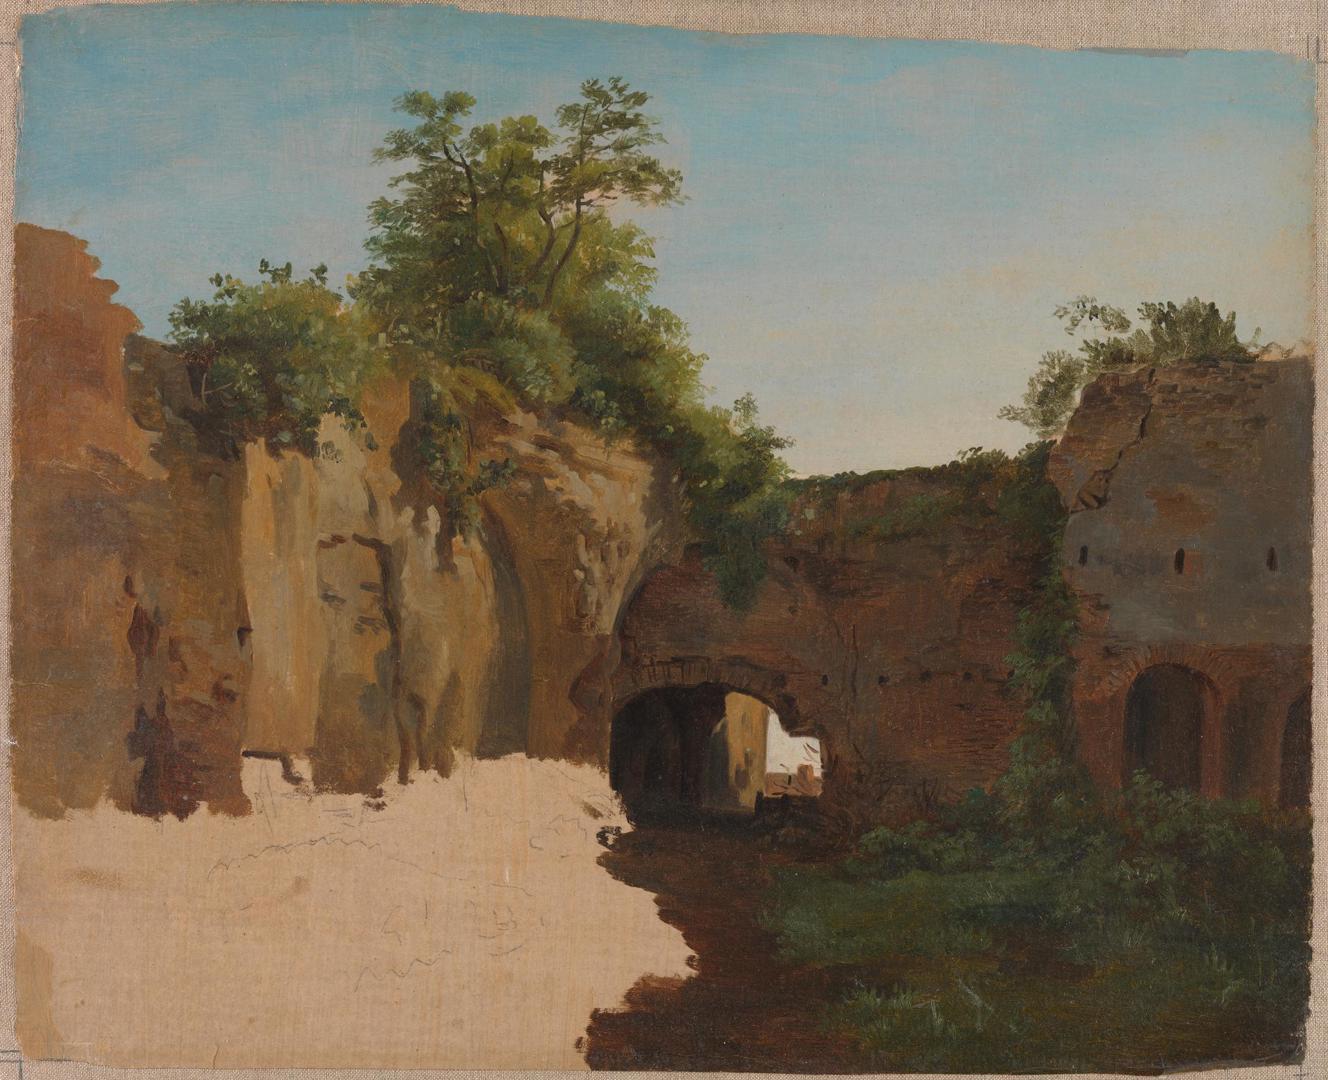 Antique Ruins (the Baths of Caracalla?) by Gilles-François-Joseph Closson